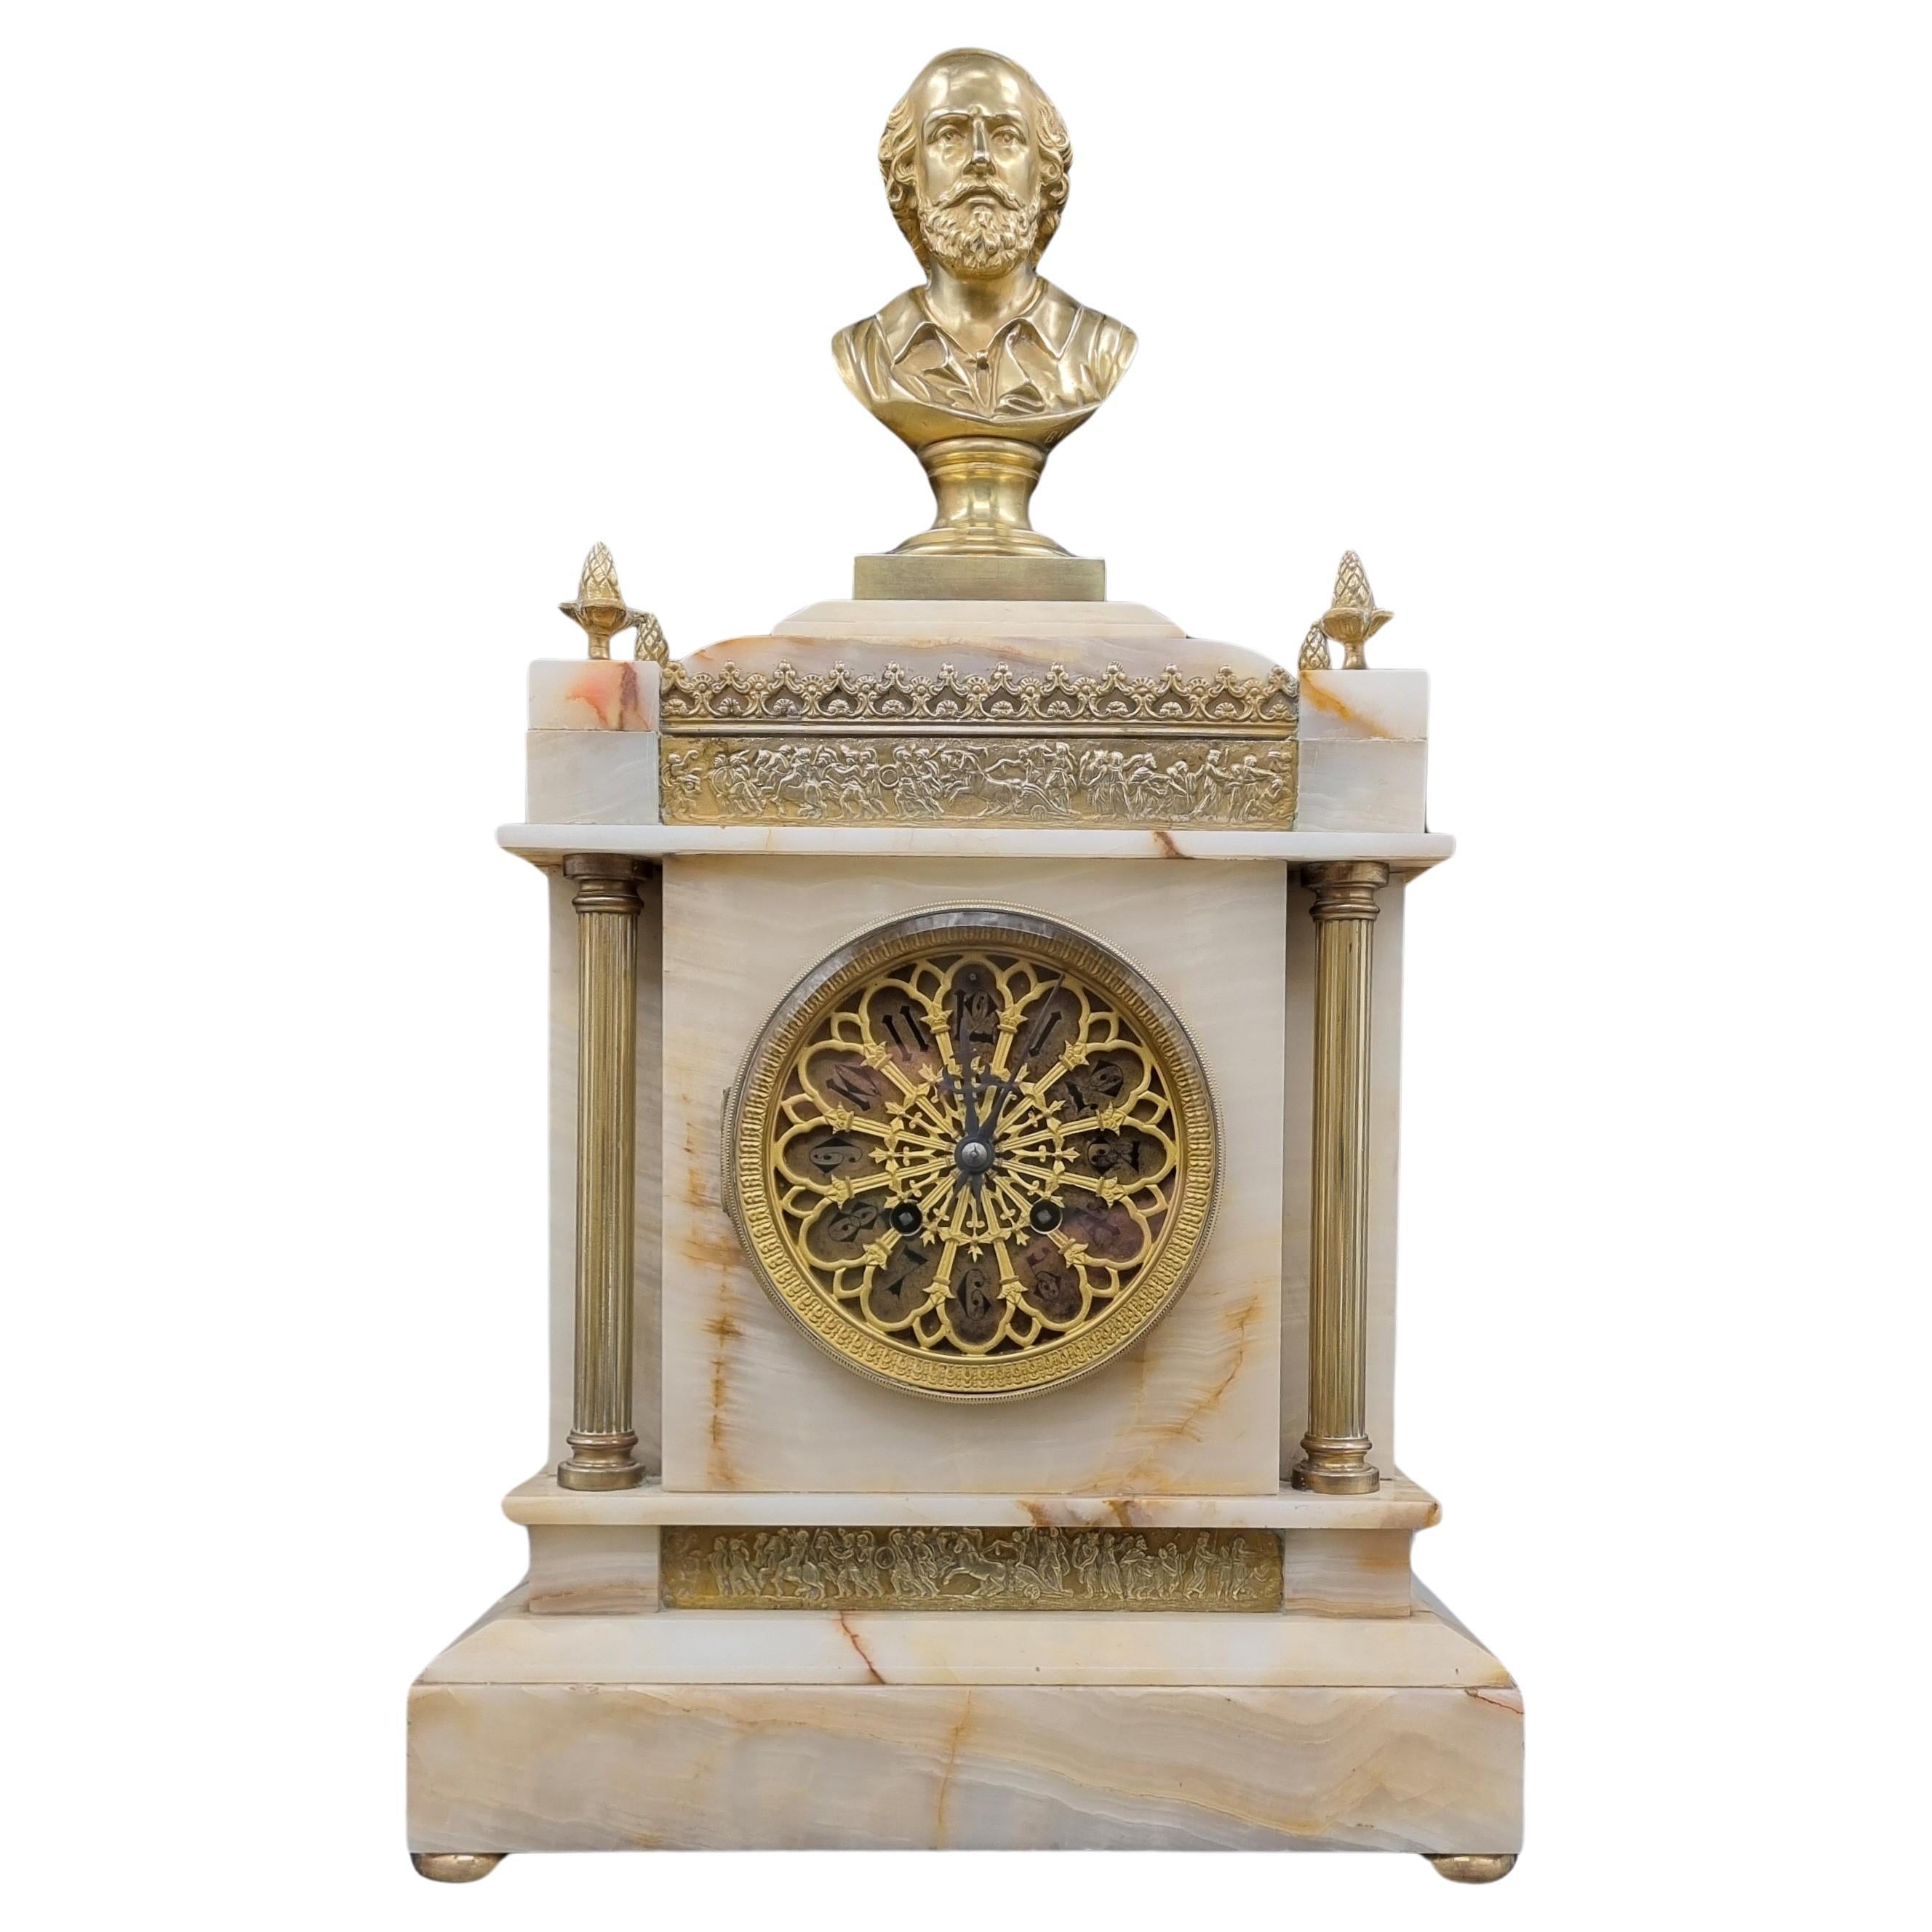 Horloge du 19e siècle en onyx et bronze avec William Shakespeare